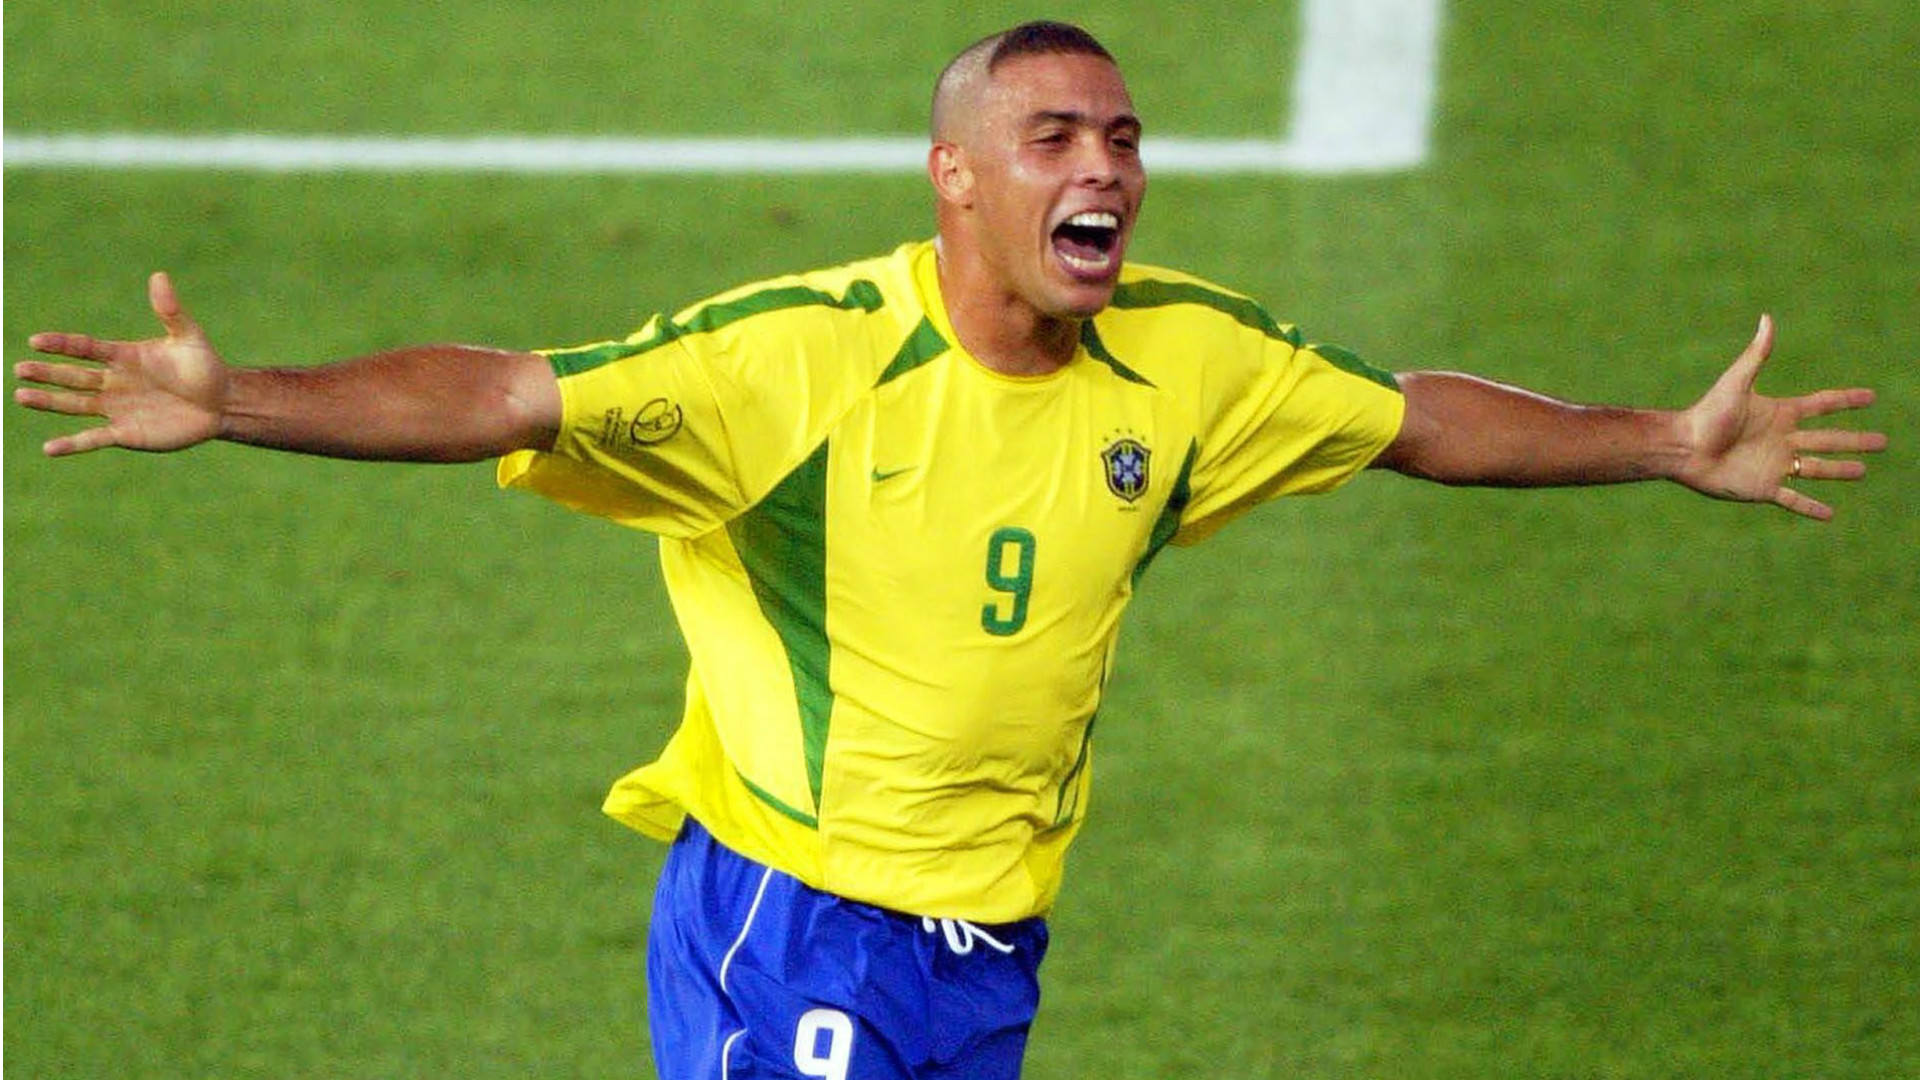 Born to score part 2 - Ronaldo - Online Sports Blog